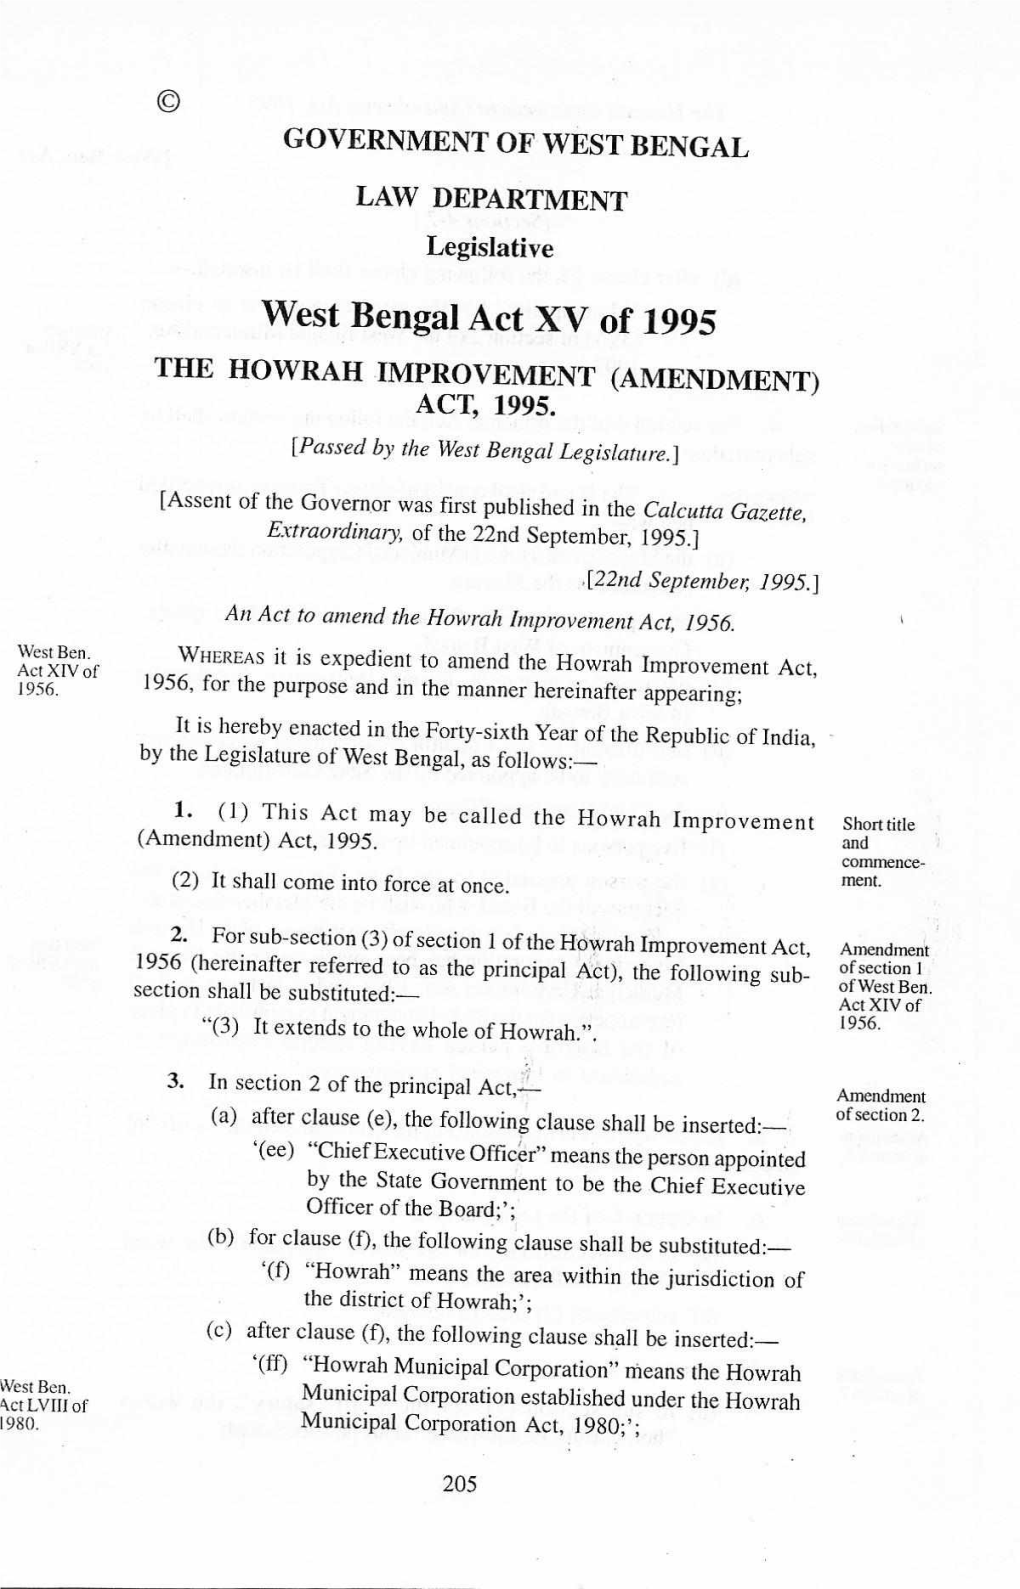 Amendment ) Act, 1995 (West Bengal Act XV of 1995